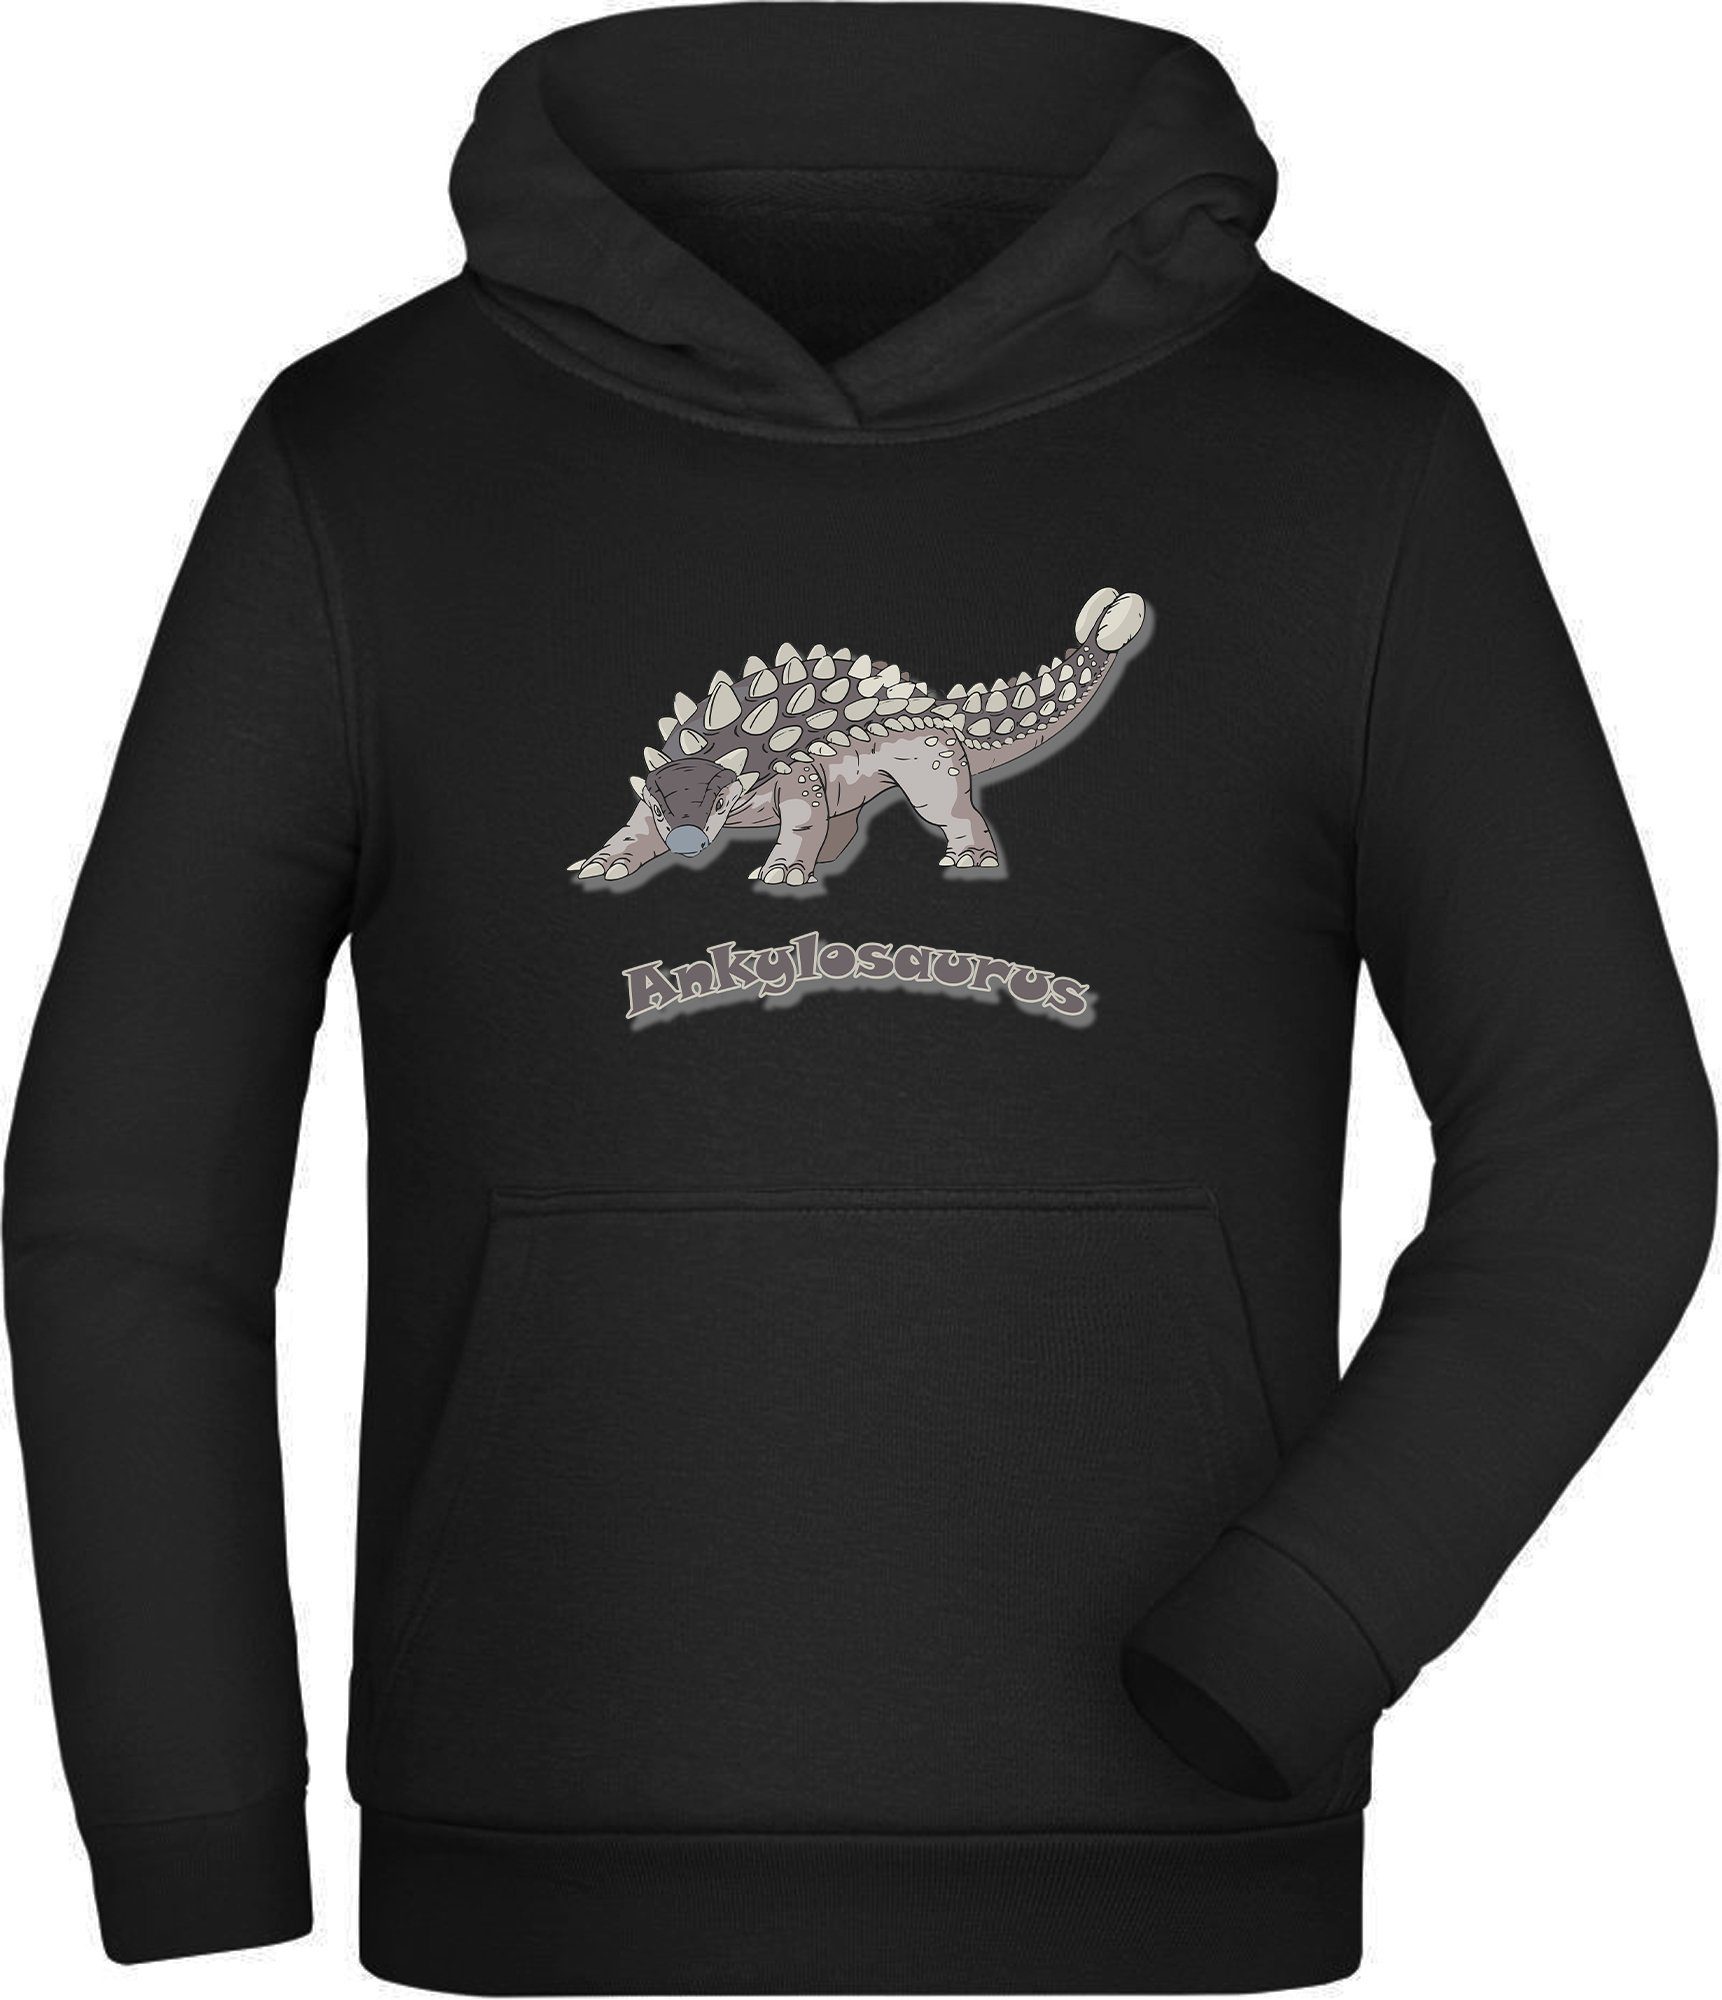 MyDesign24 Hoodie Kinder i63 Kapuzen - mit Sweatshirt Aufdruck, Ankylosaurus Kapuzensweater Mit